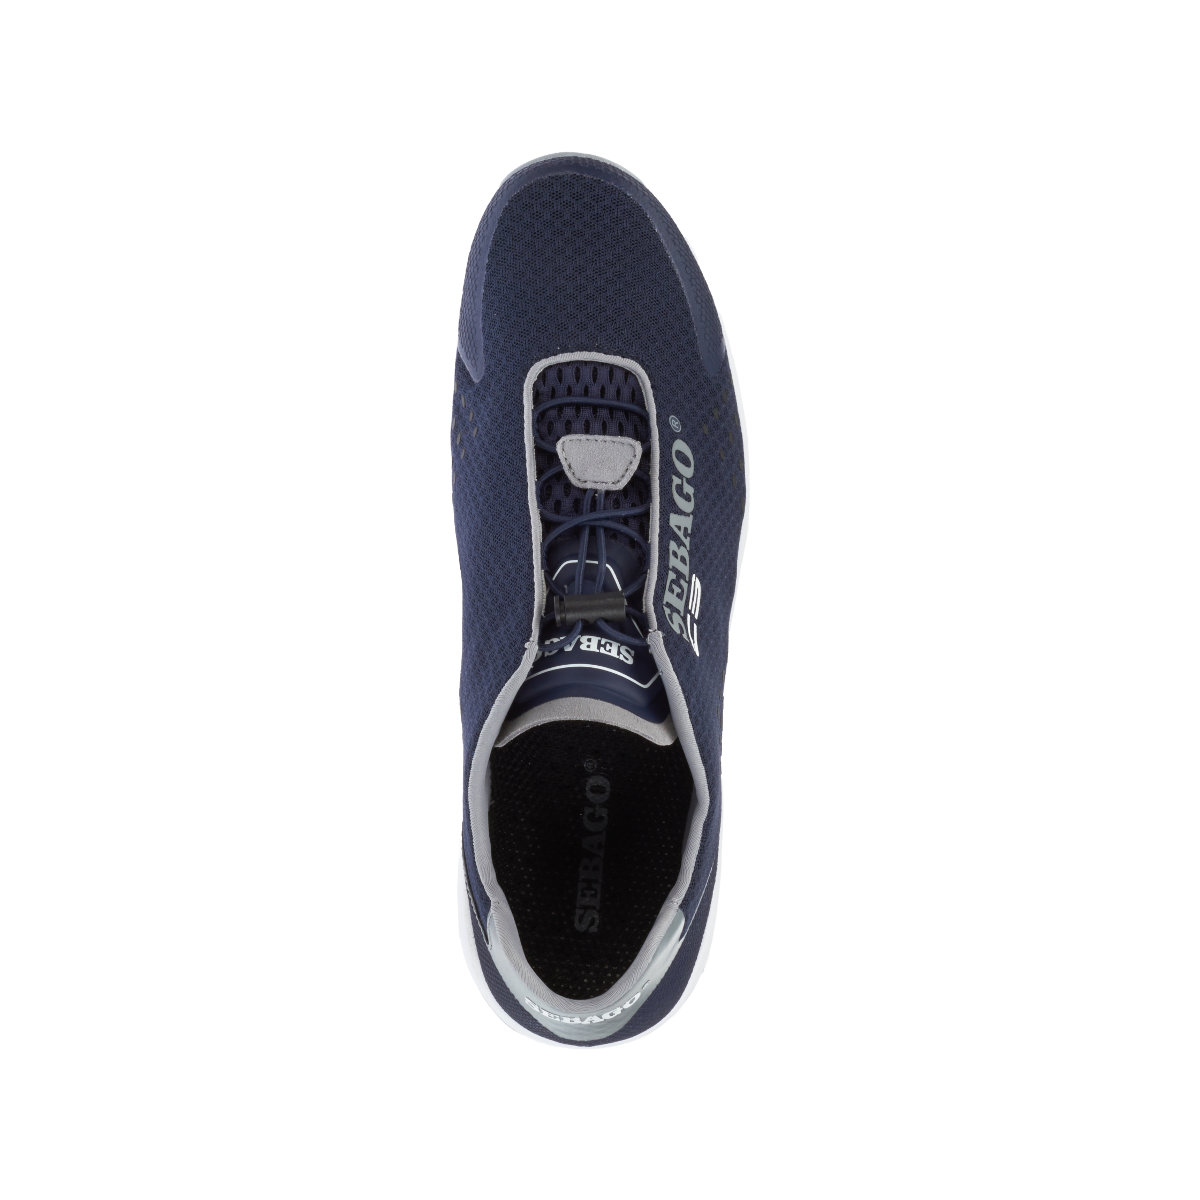 Sebago Cyphon Sea Sport chaussures à voile homme navy, taille EU 43 (US 9)